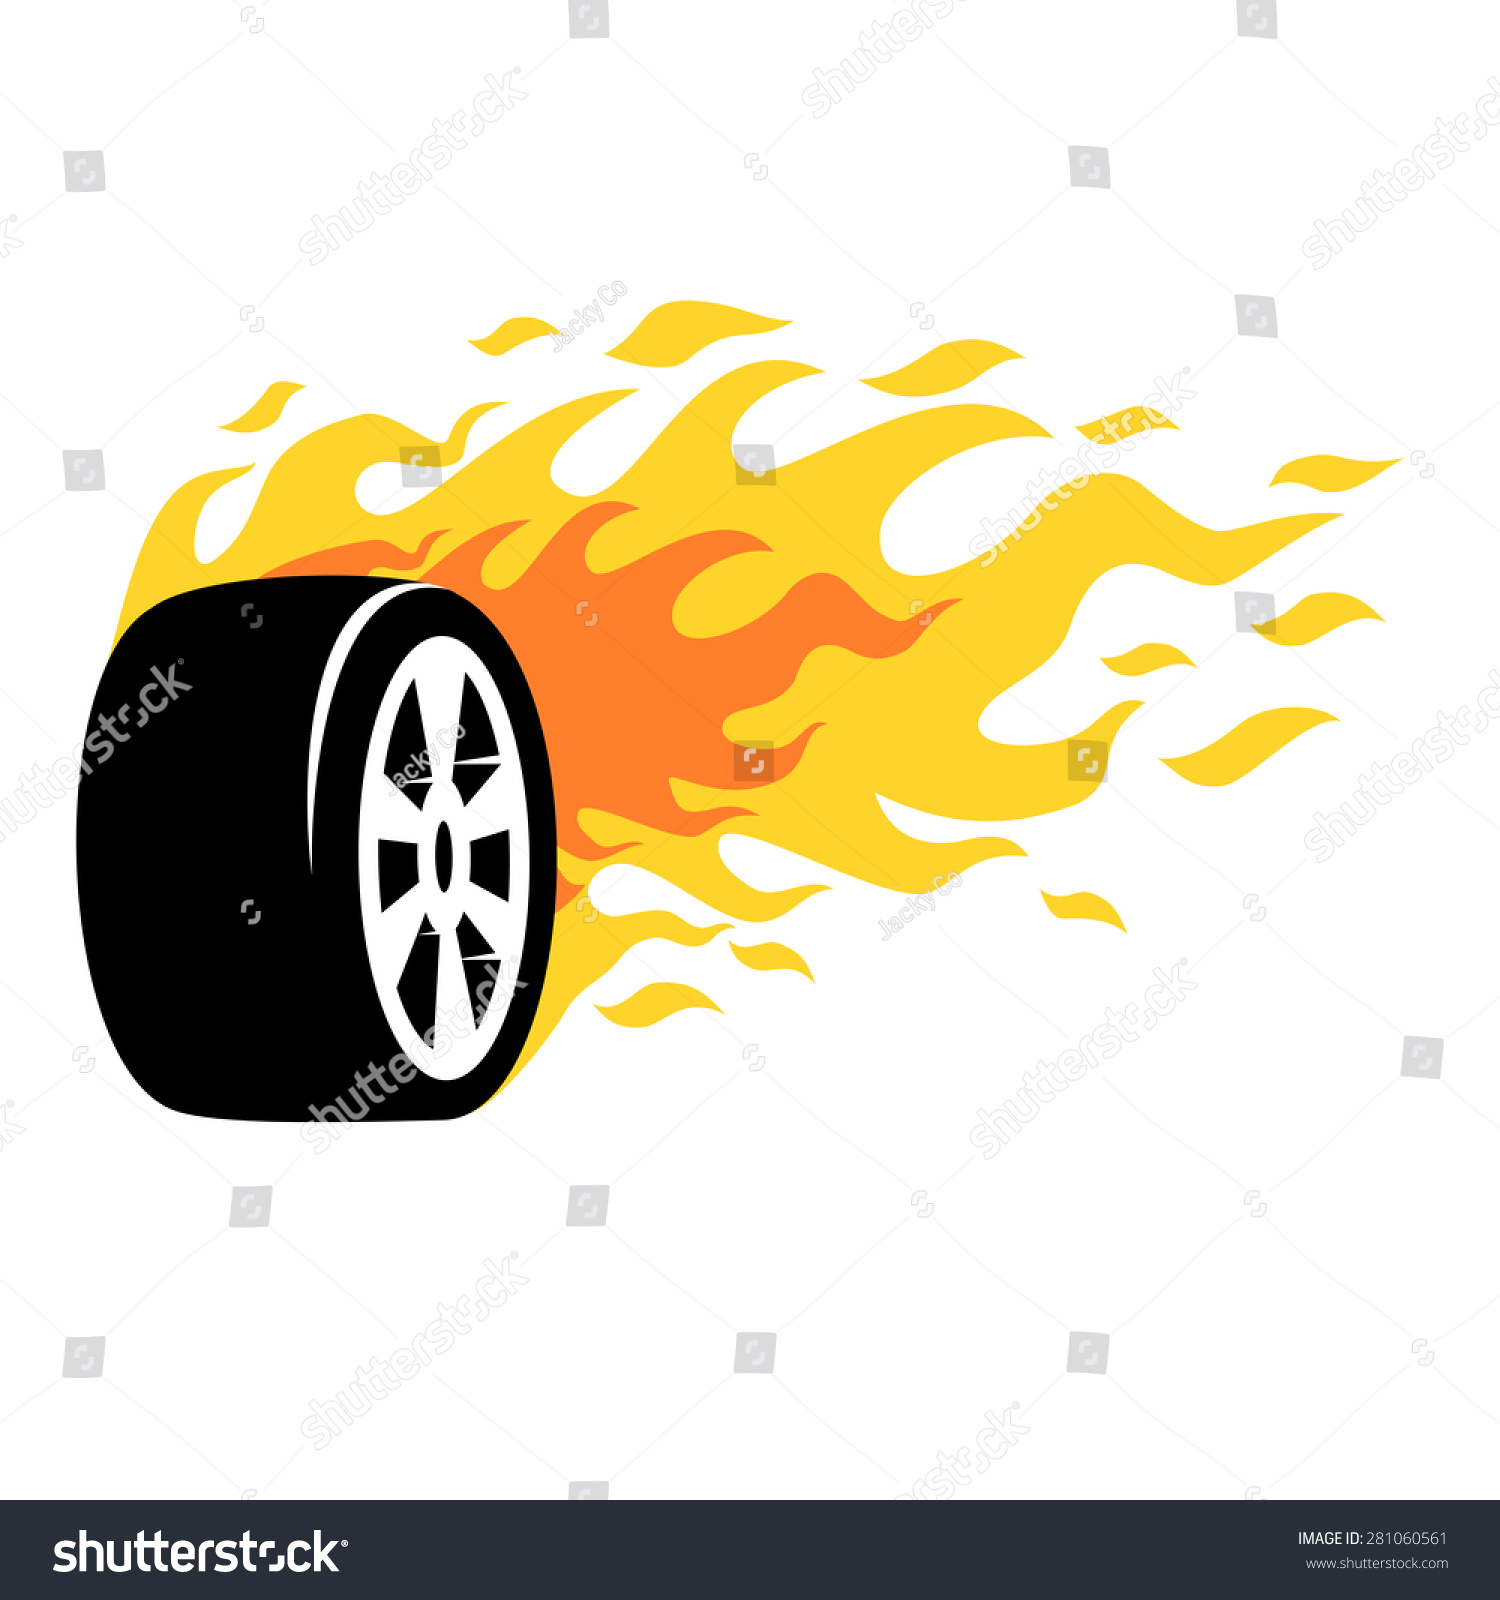 Burning Wheel Icons Vector. - 281060561 : Shutterstock